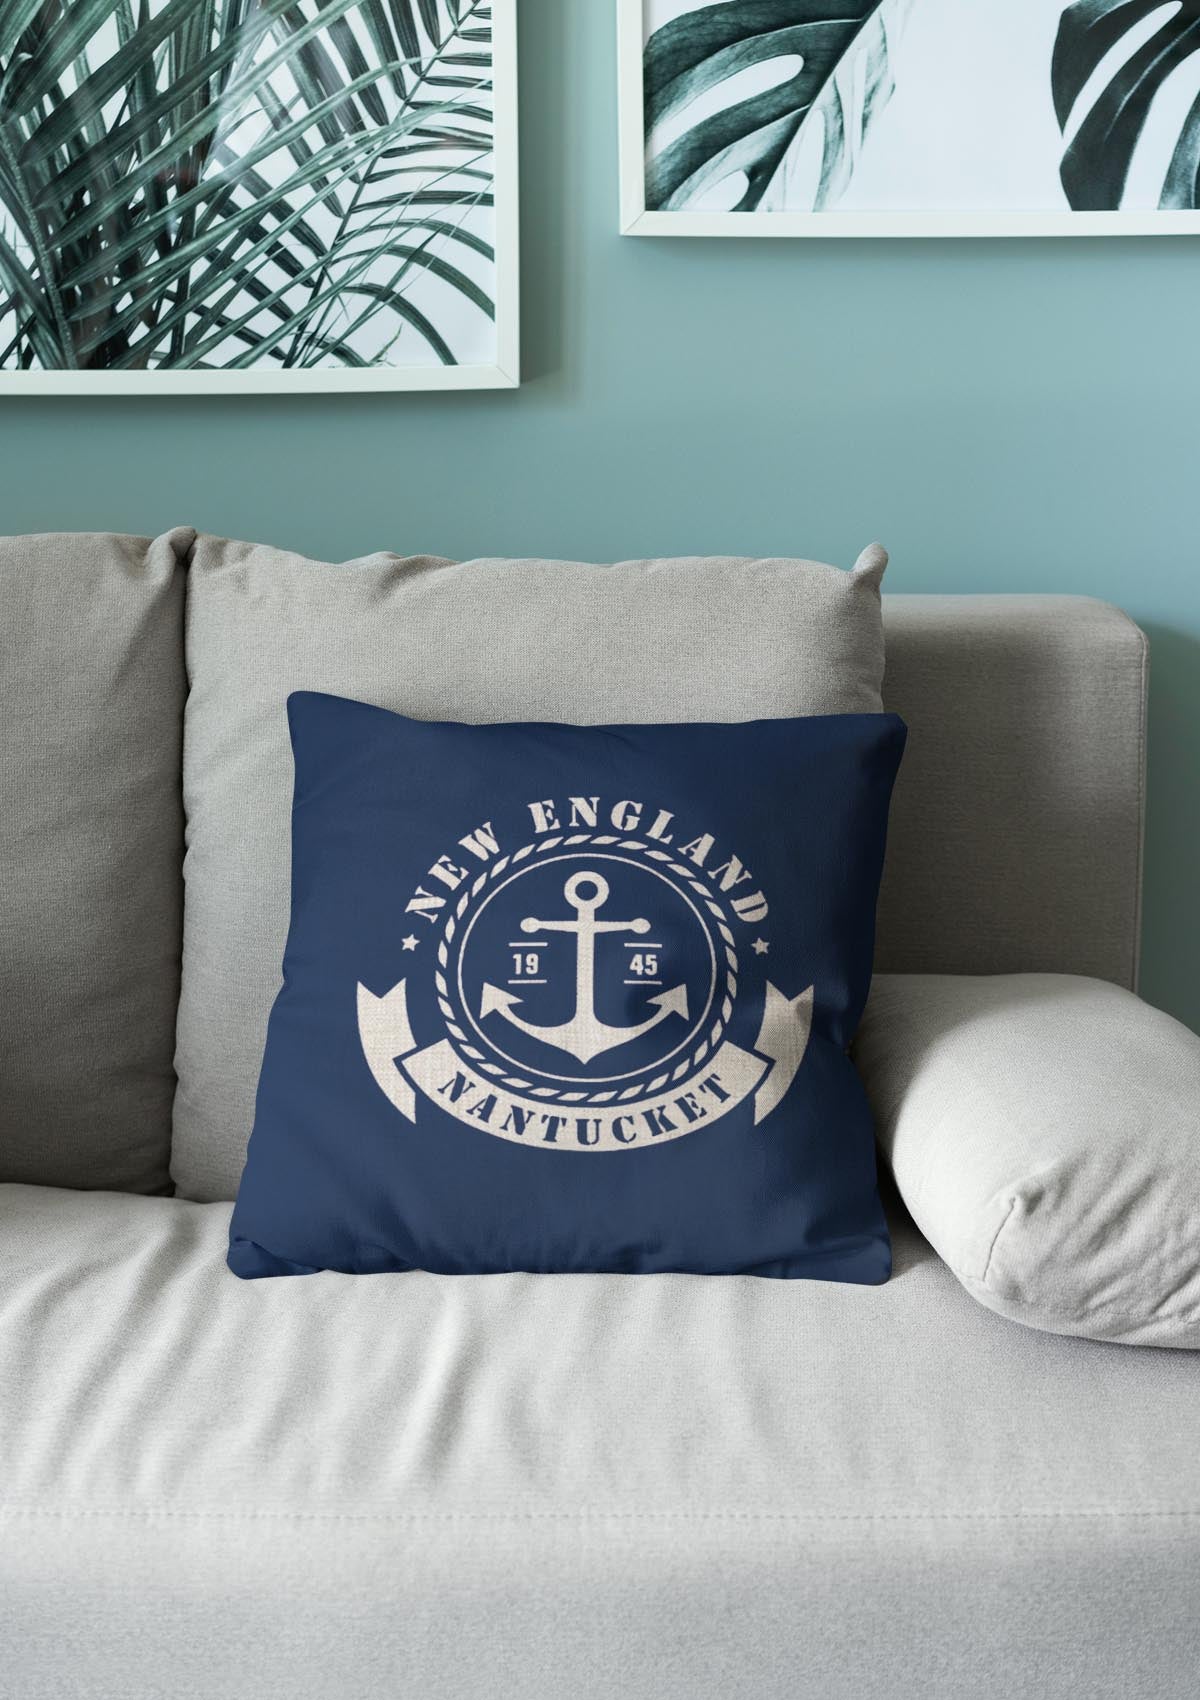 nautical themed cushion covers